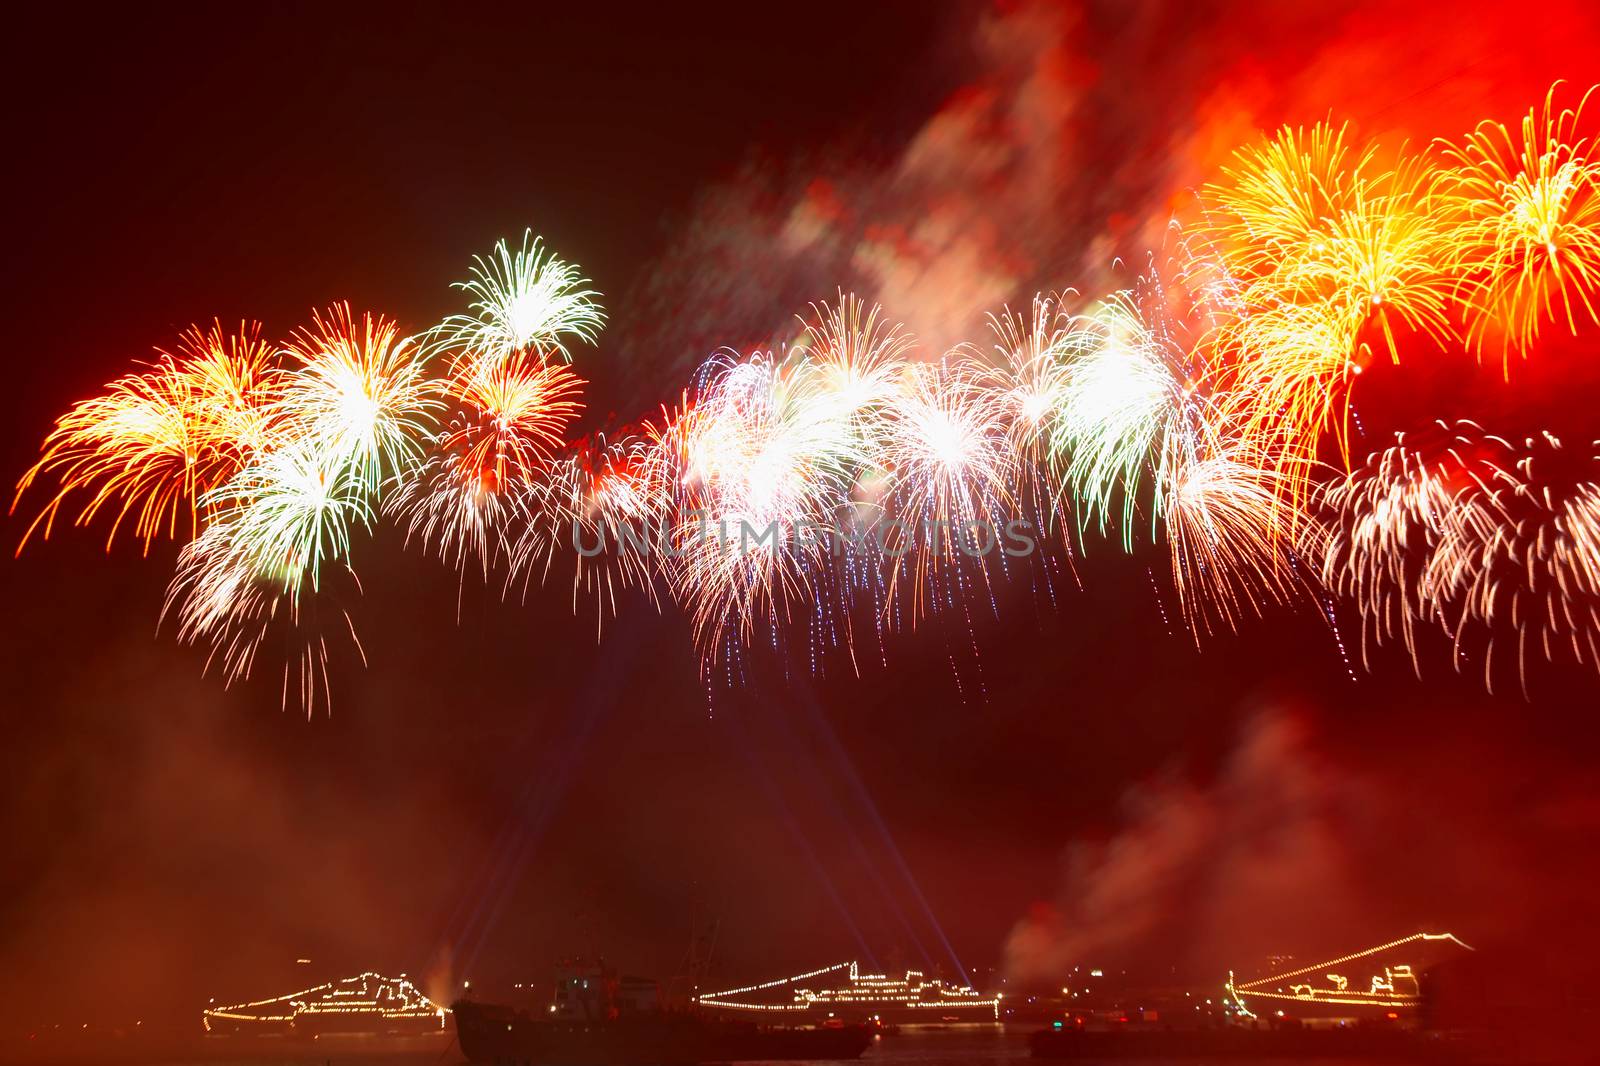 Salute, fireworks above the bay. by vapi